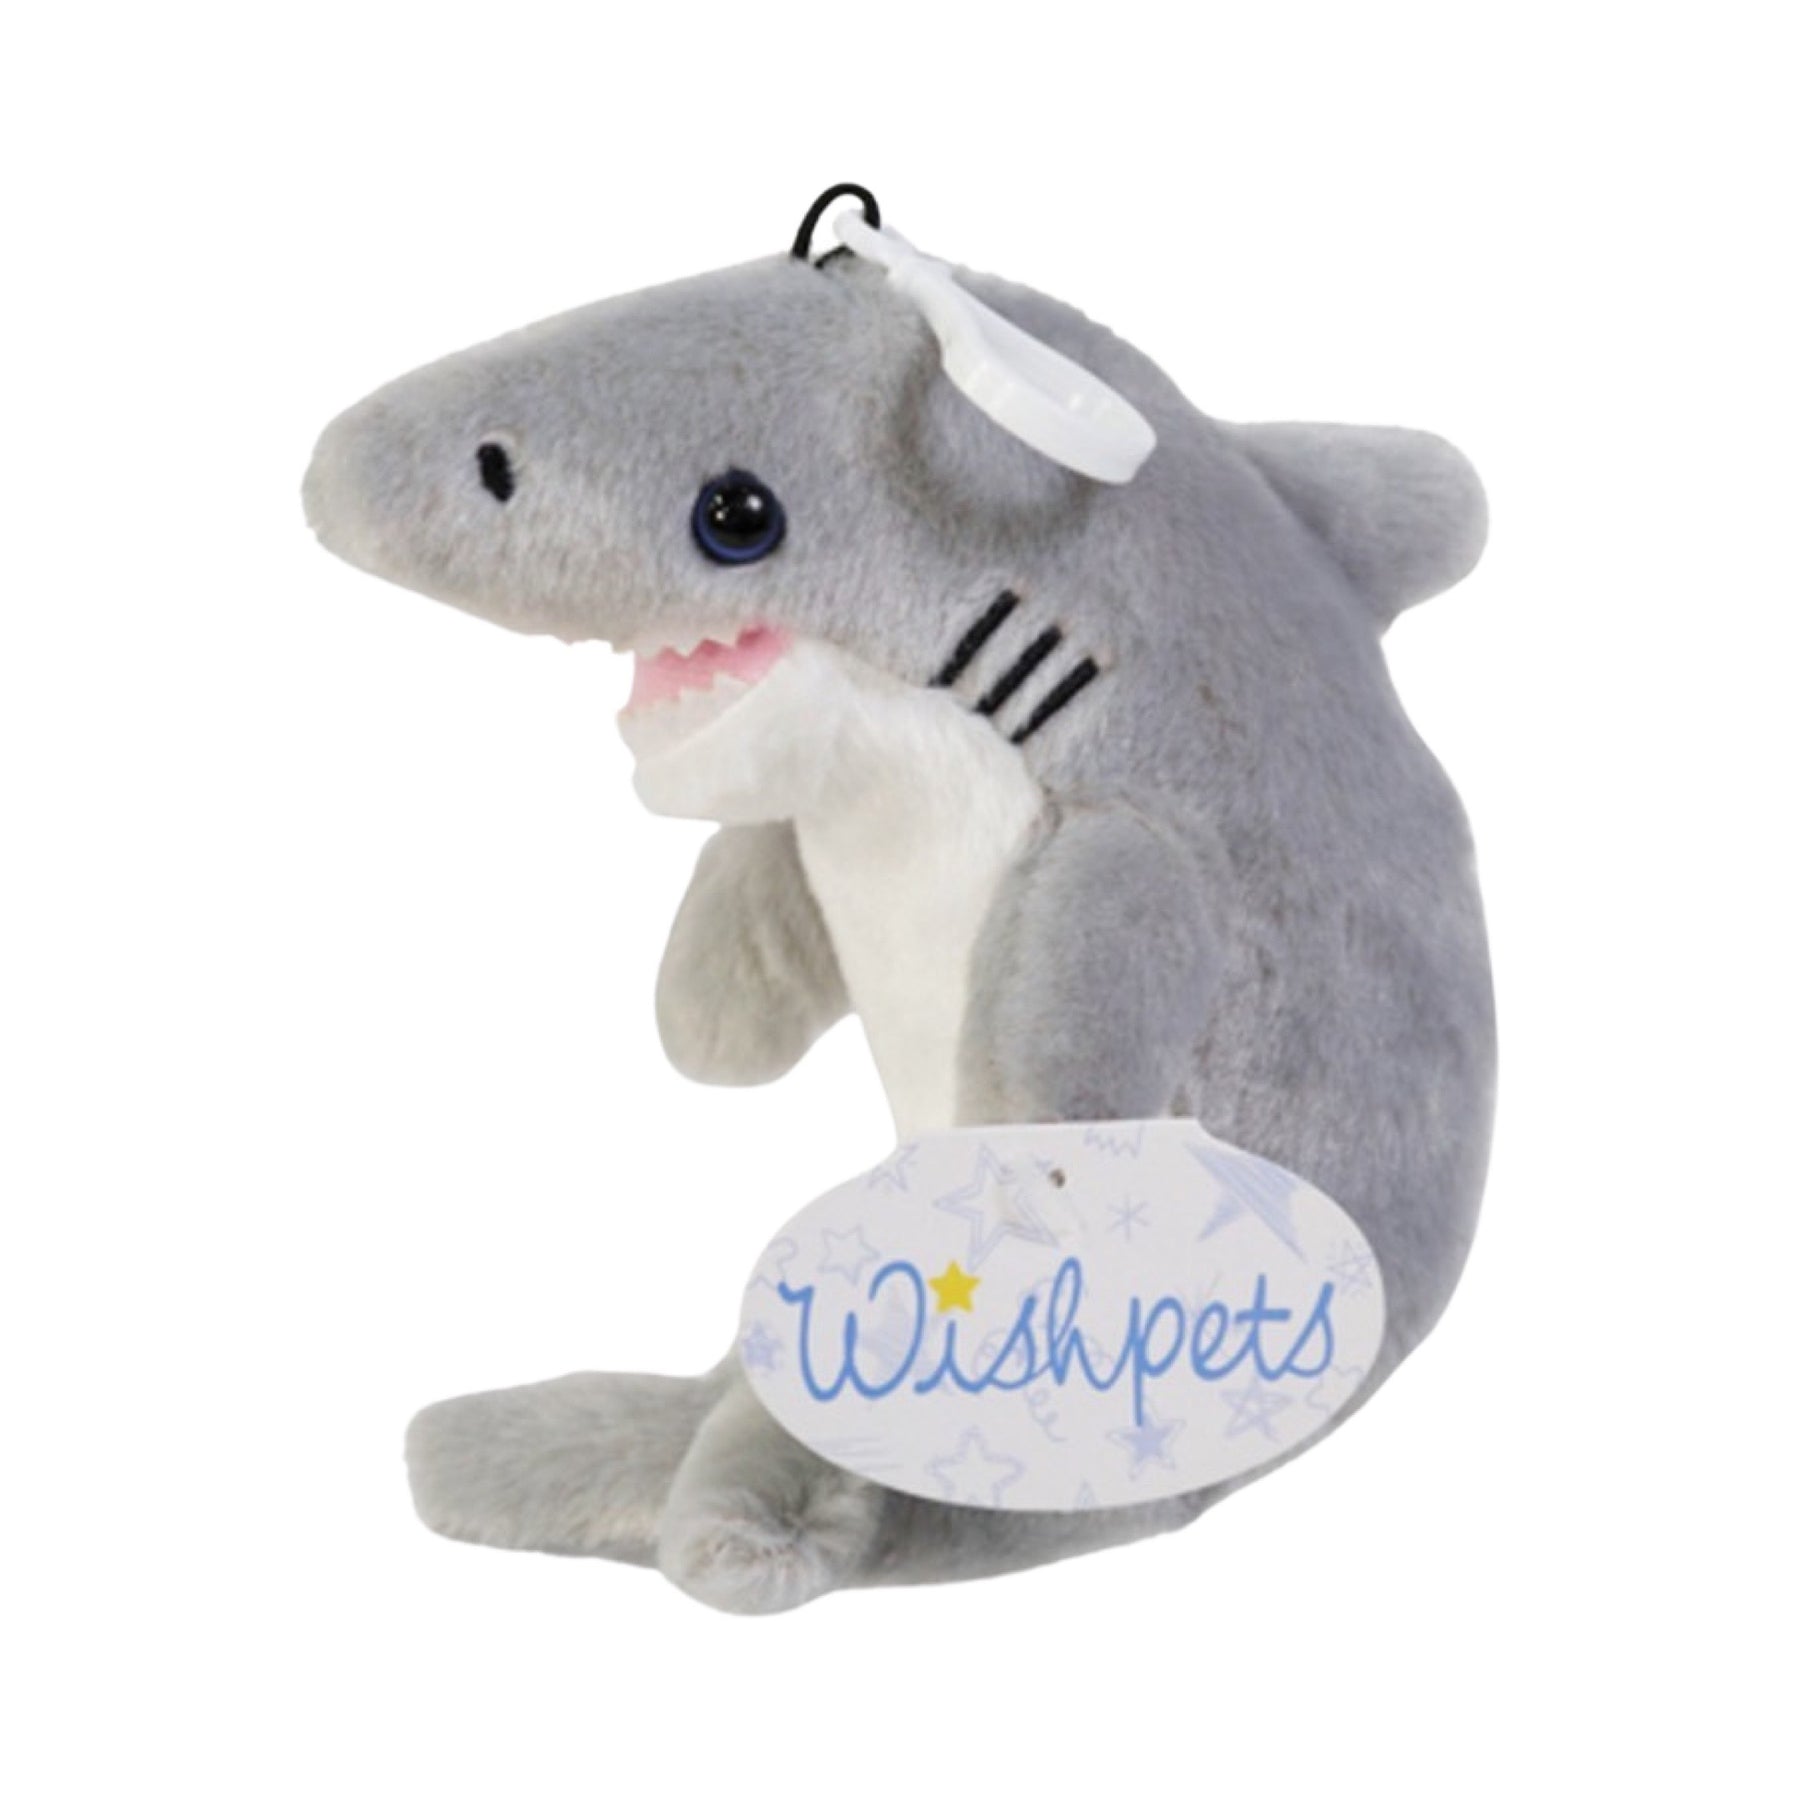 5" WISHPETS Shark Toy Mini Plush Stuffed Animal w/Clip for Backpack